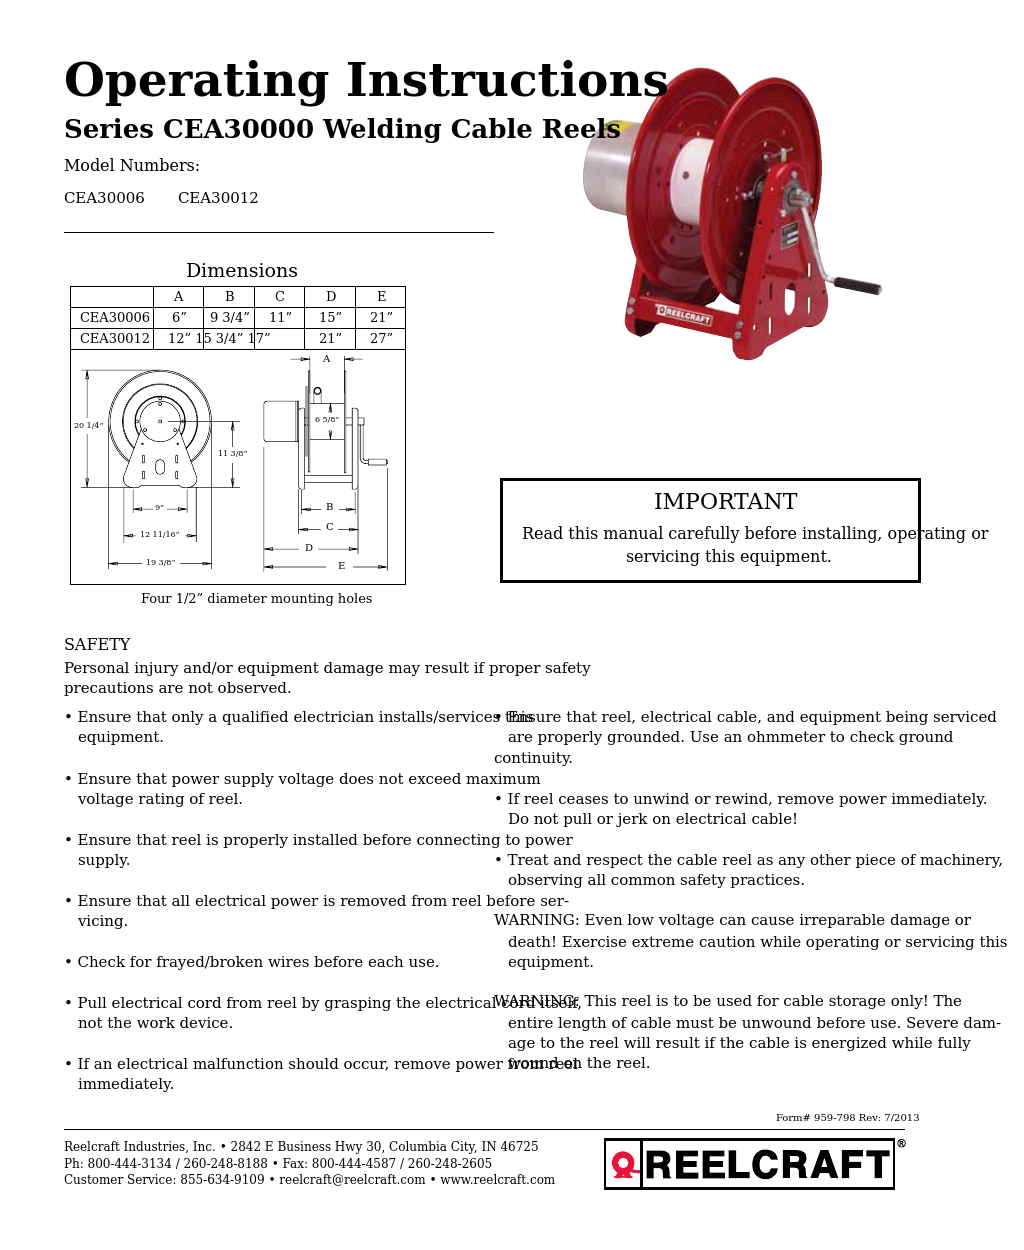 Series CEA30000 Welding Cable Reels